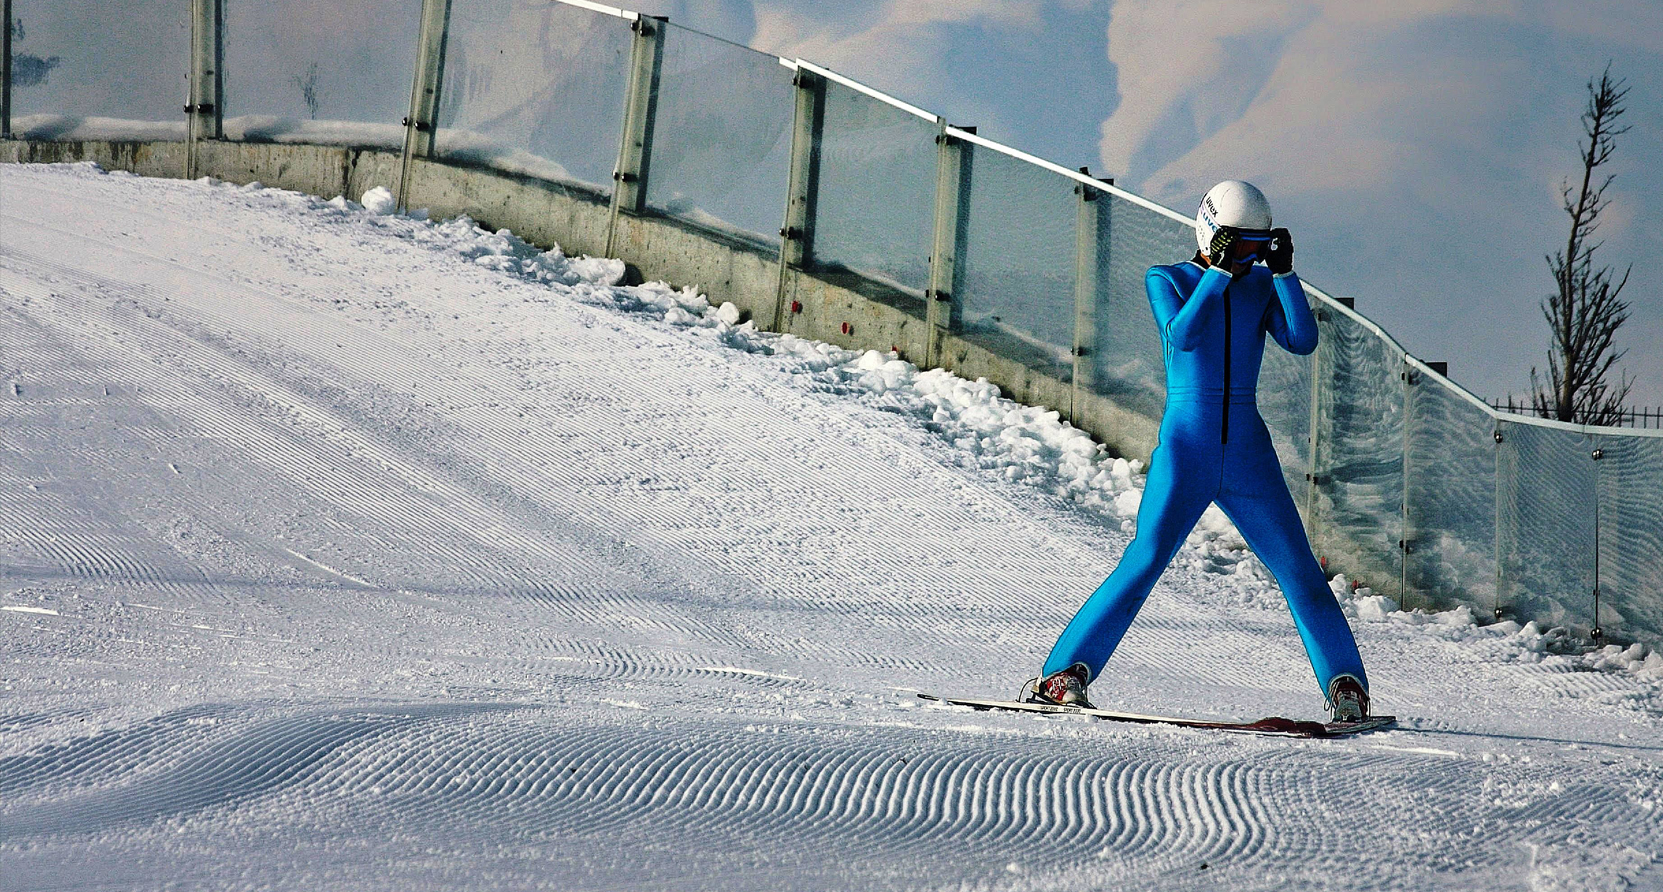 Erzurum Ski Jumping Ramp